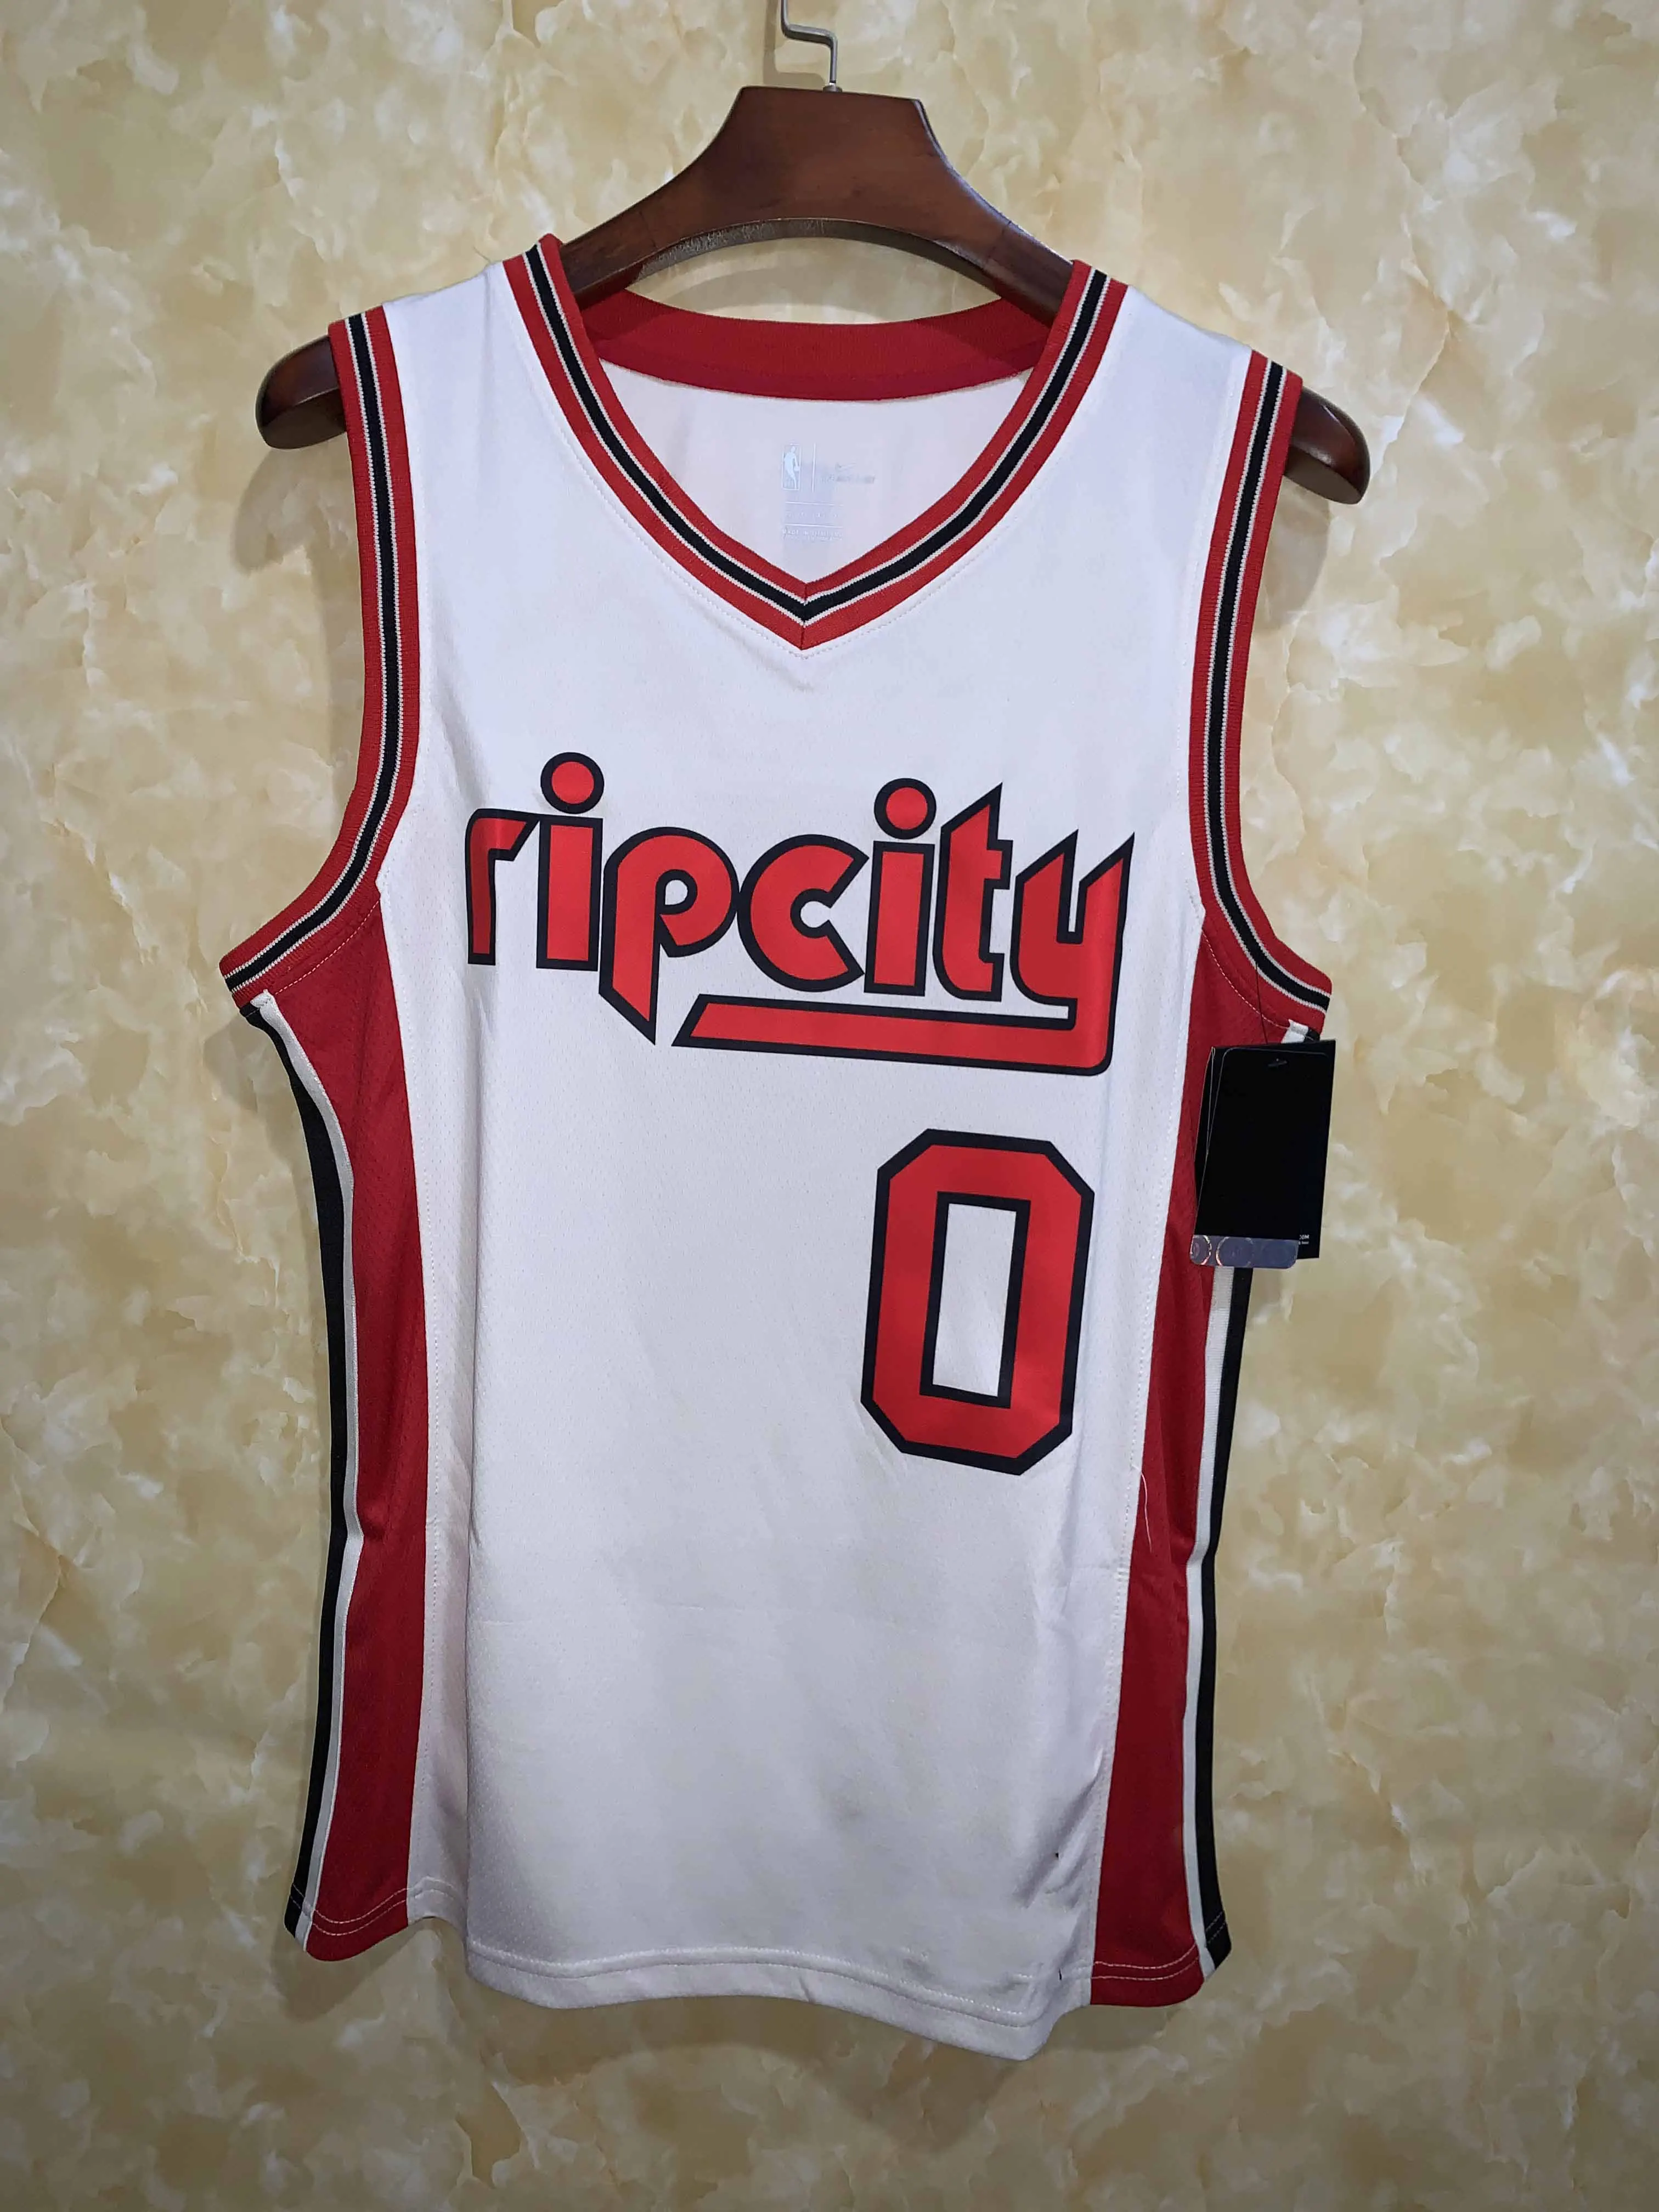 

2021 City Edition Hot Press Damian Lillard 0 Basketball Jerseys Carmelo Anthony 00 clothing CJ McCollum 3 shirts Men Tank Tops